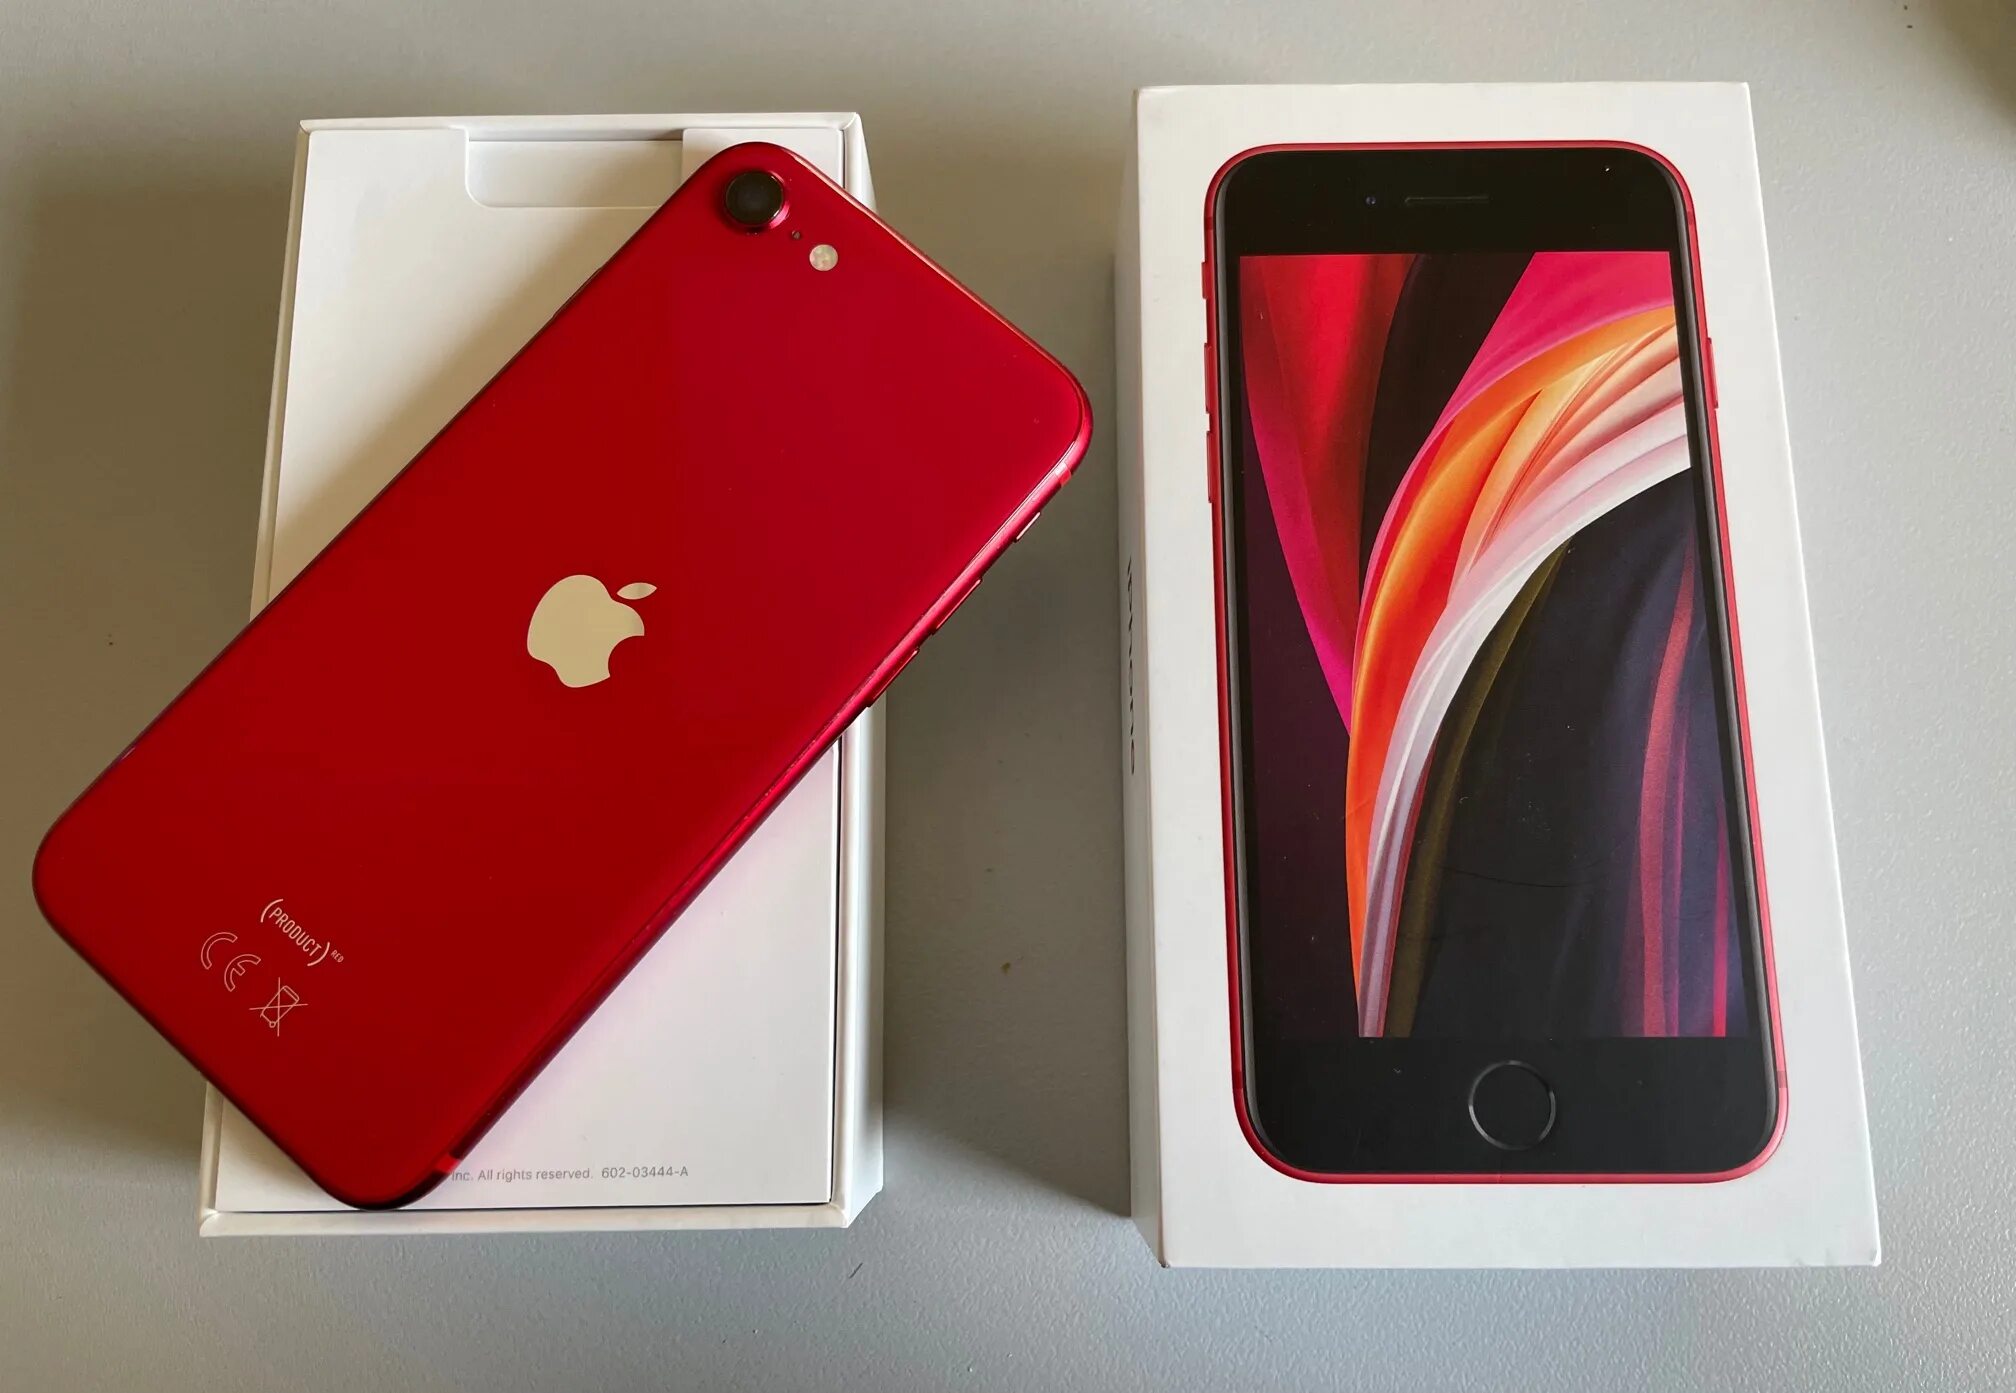 Iphone se 2020 64gb. Iphone se (2020) 64gb (product) Red. Iphone se (2020) 64gb Red. Iphone se 2020 Red. Apple iphone se(2020) product Red 64gb.